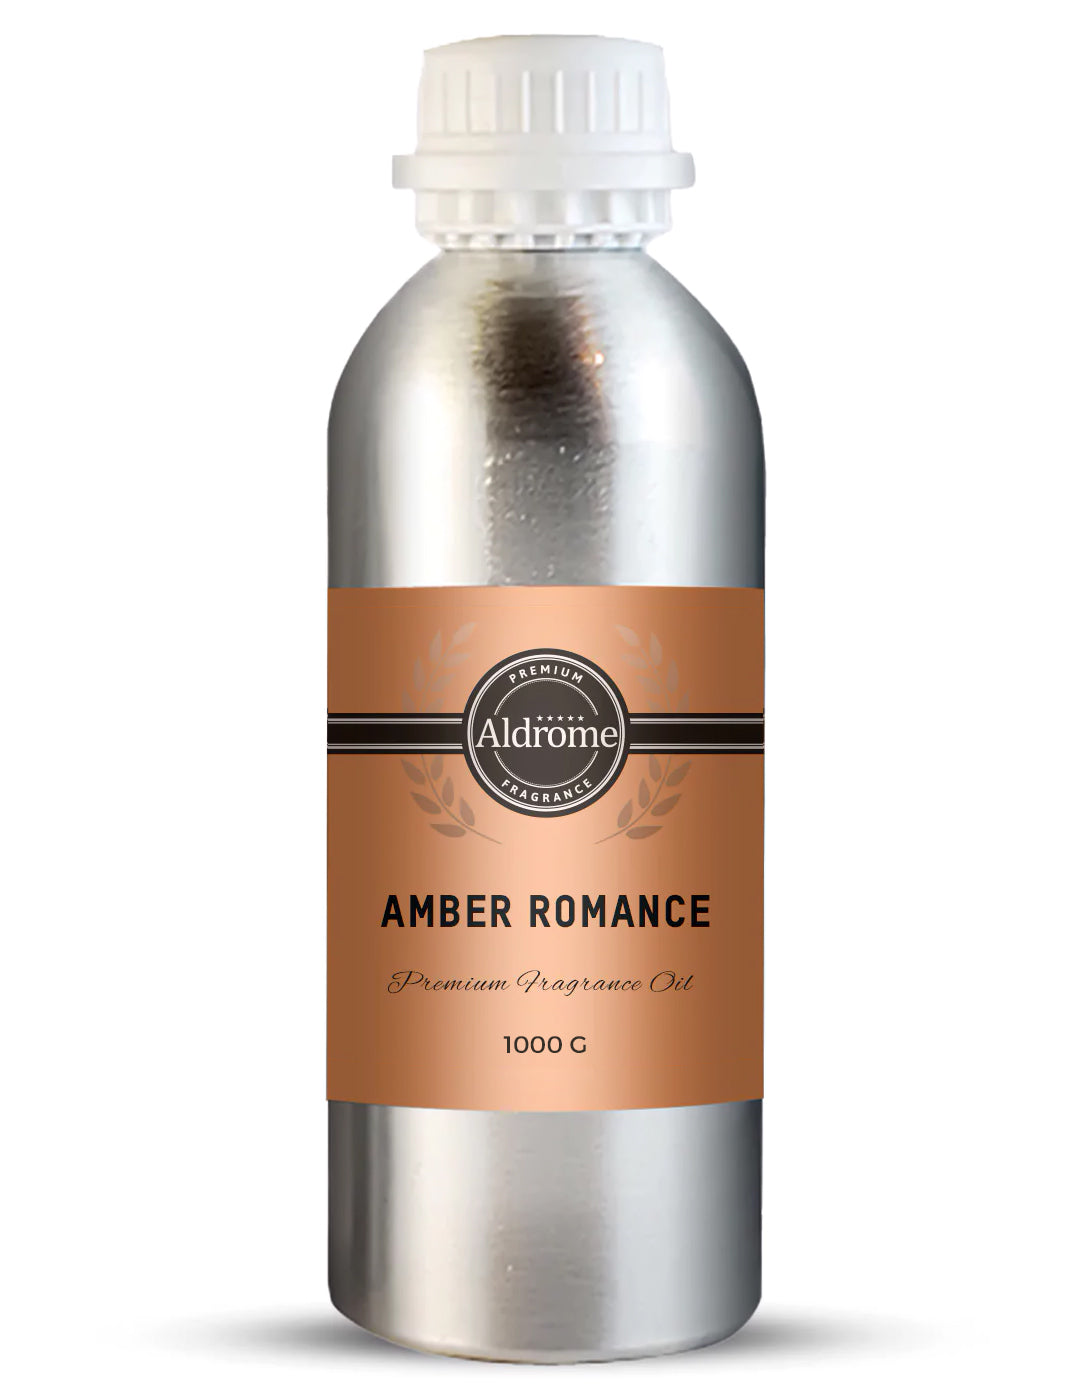 Amber Romance Fragrance Oil  Nature's Oil Premium Fragrances